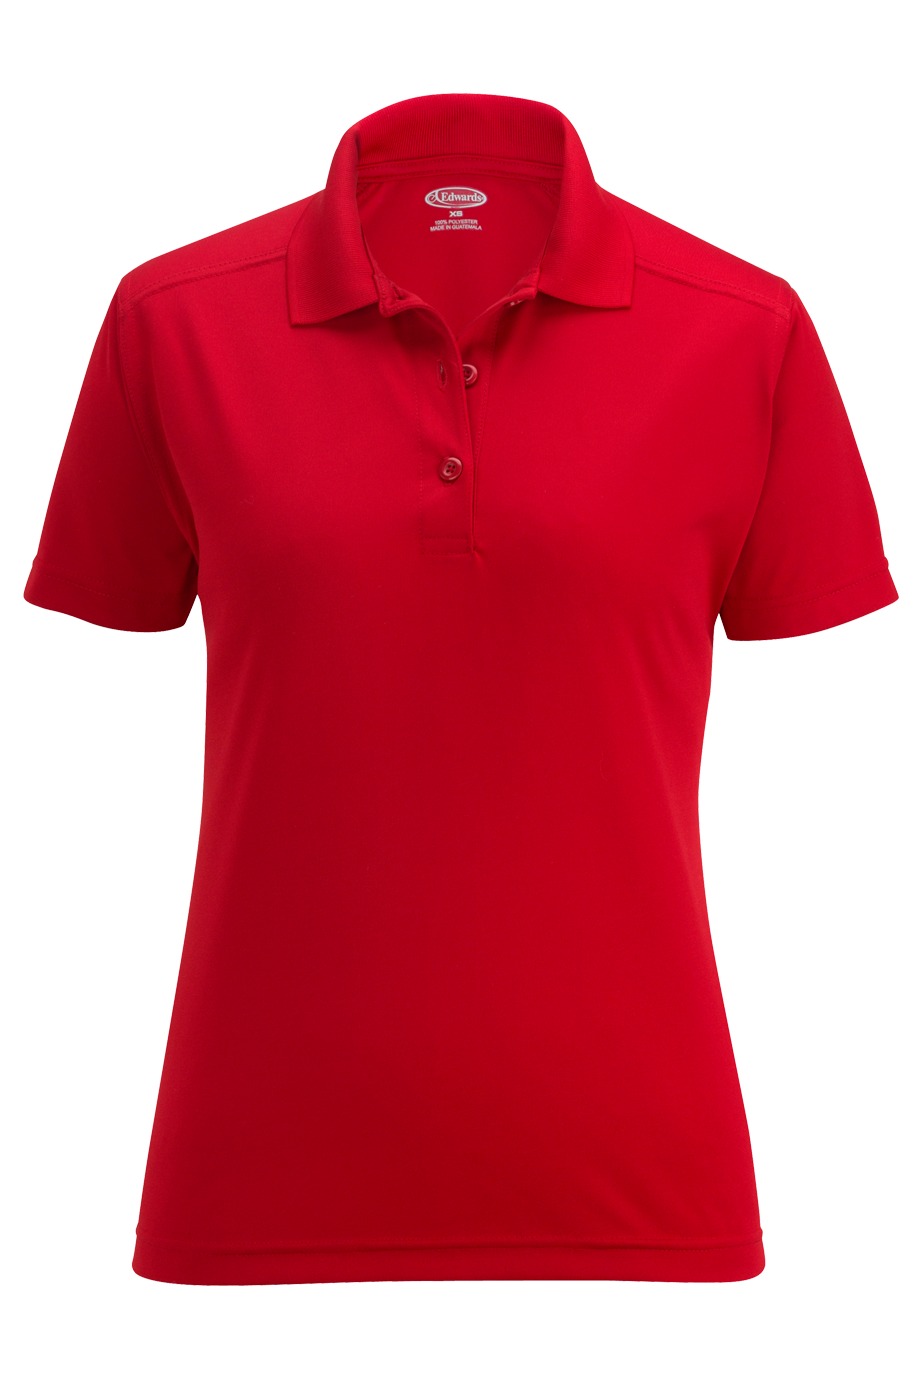 Edwards Garment 5512 - Ladies' Snag-Proof Polo